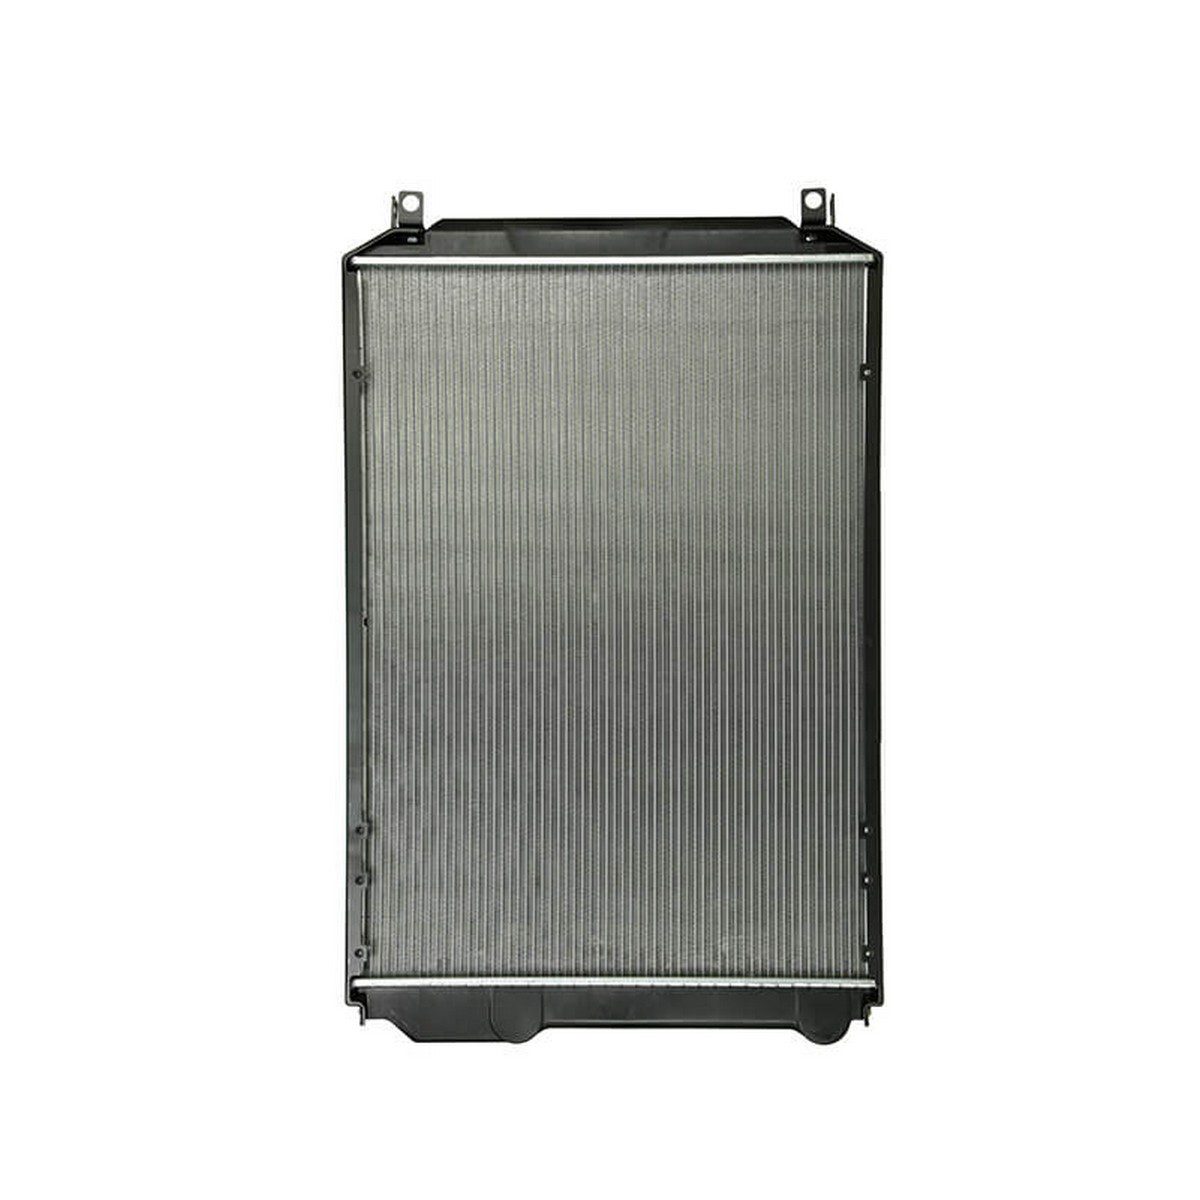 gmc isuzu ftrlow cab forwardt series 04 07 radiator oem 89023385 2